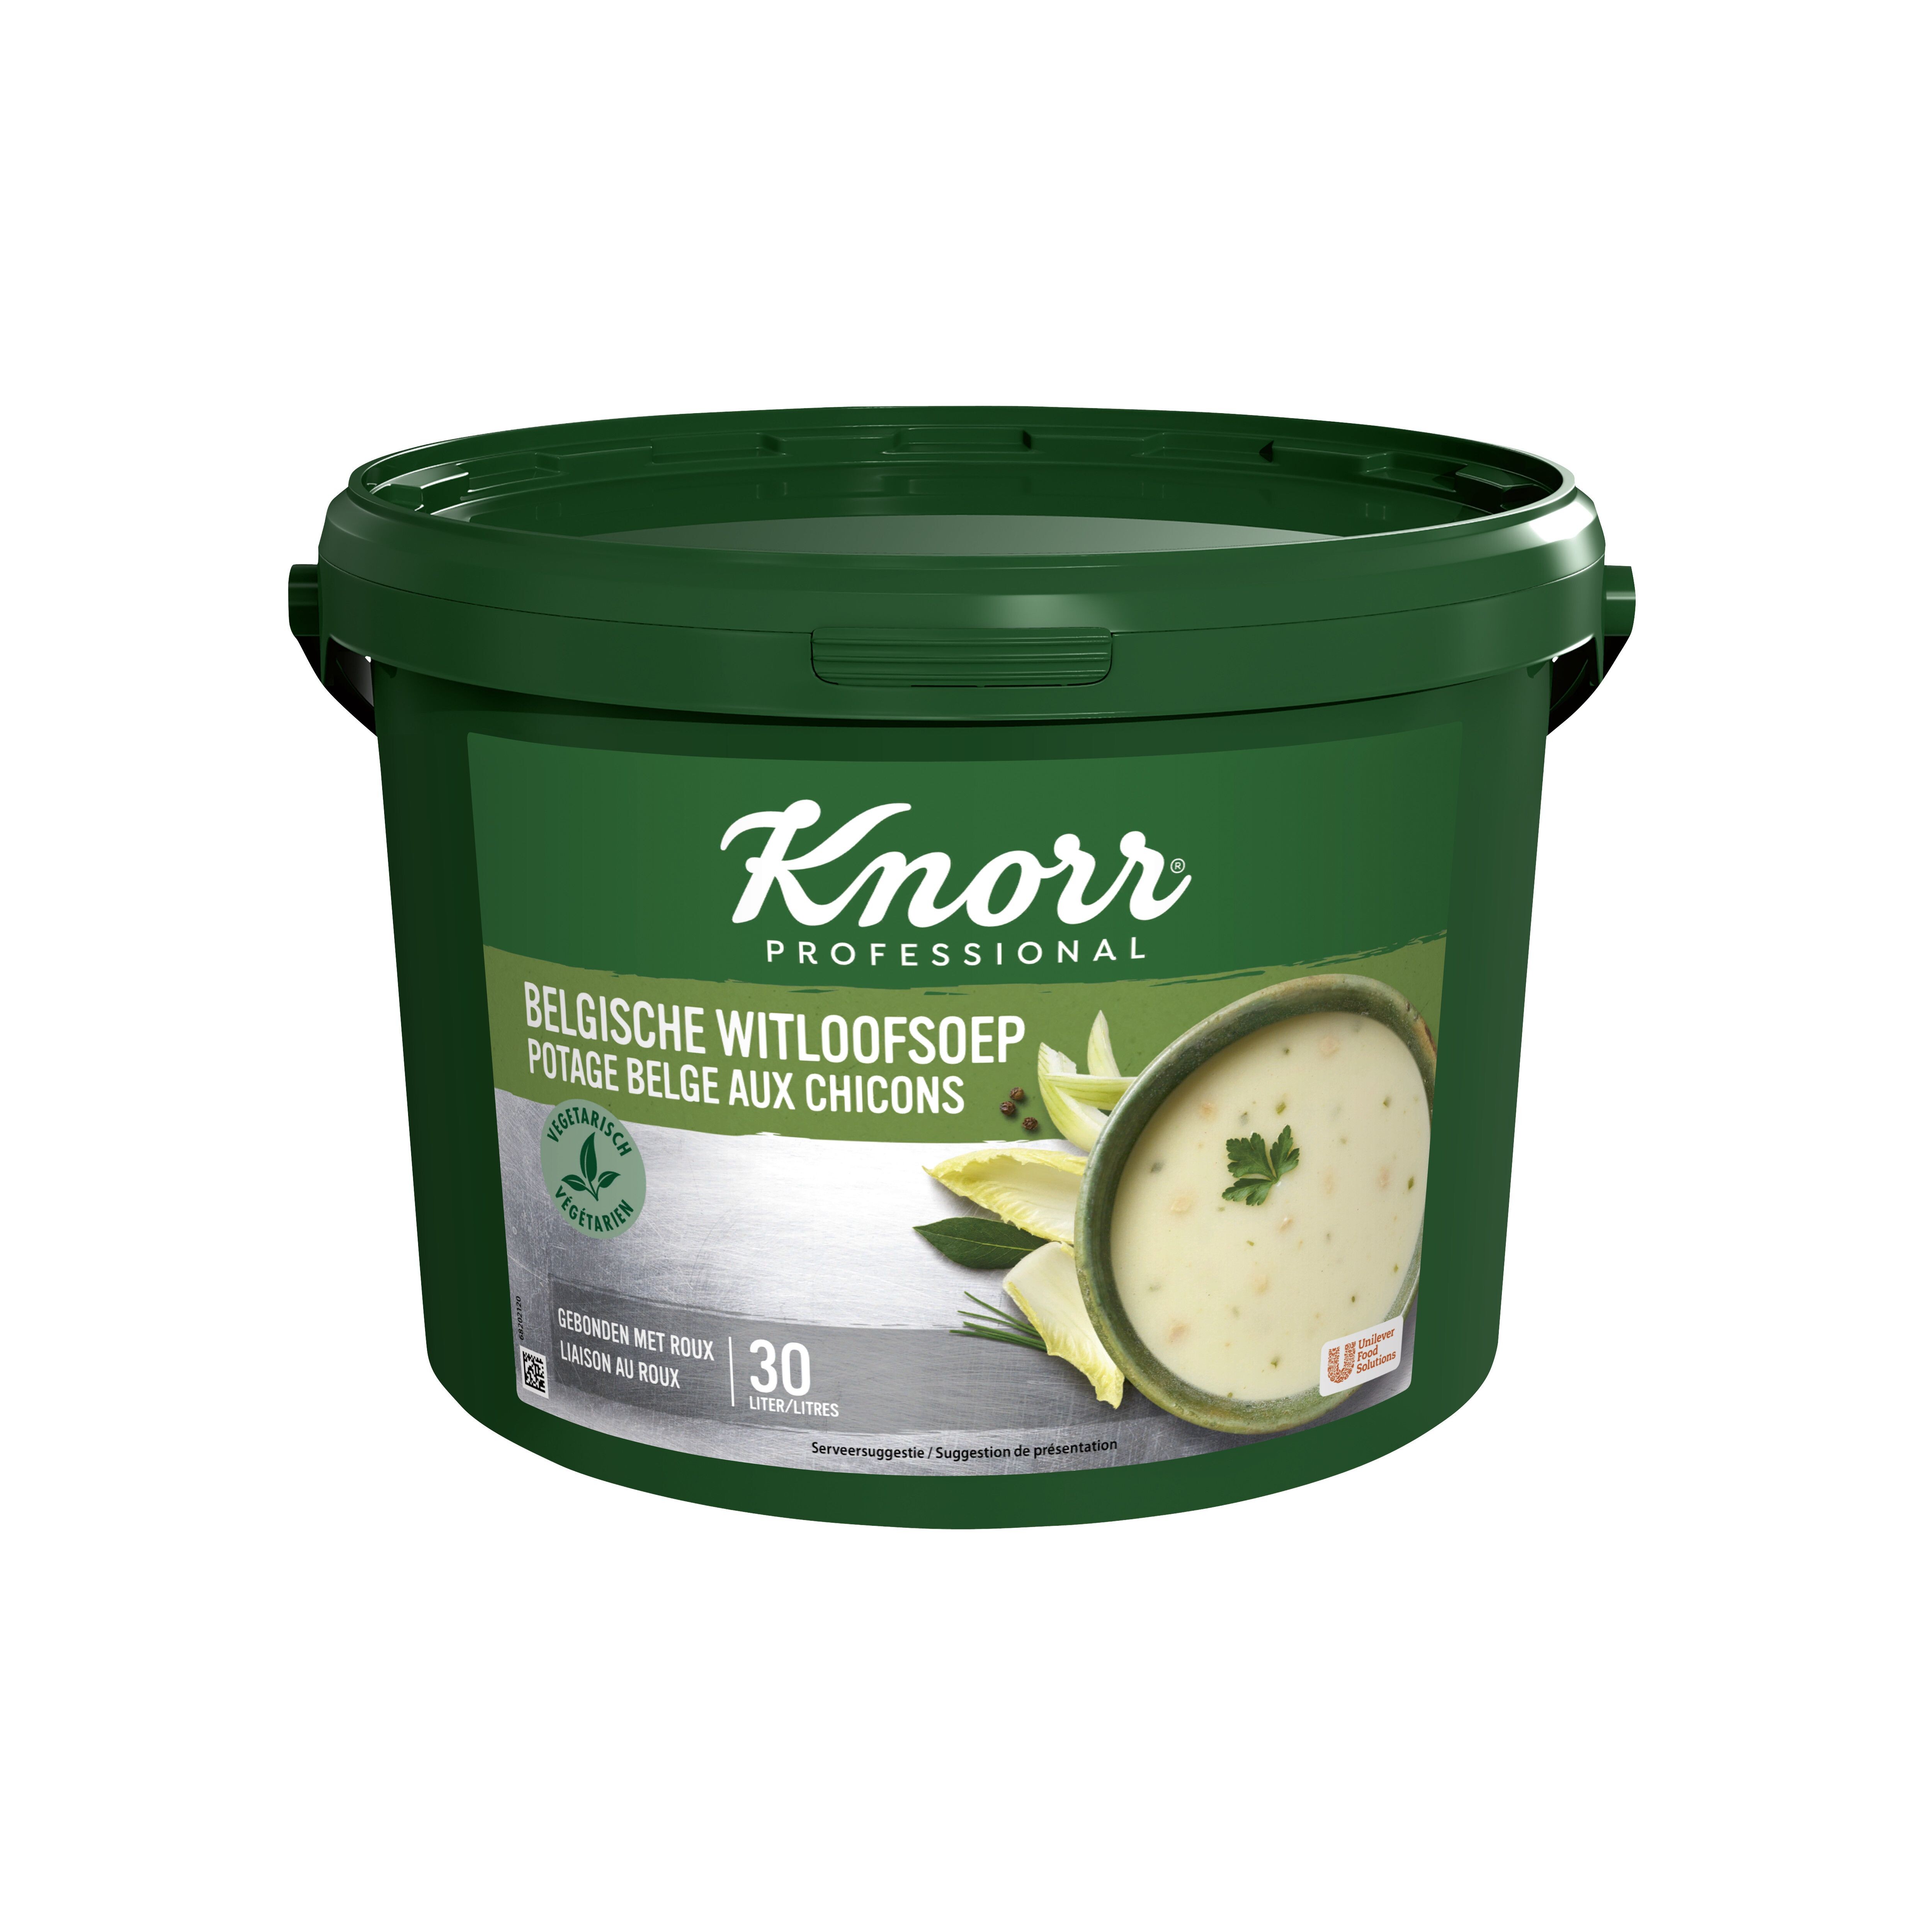 Knorr soep Belgische witloofsoep 3kg Professional